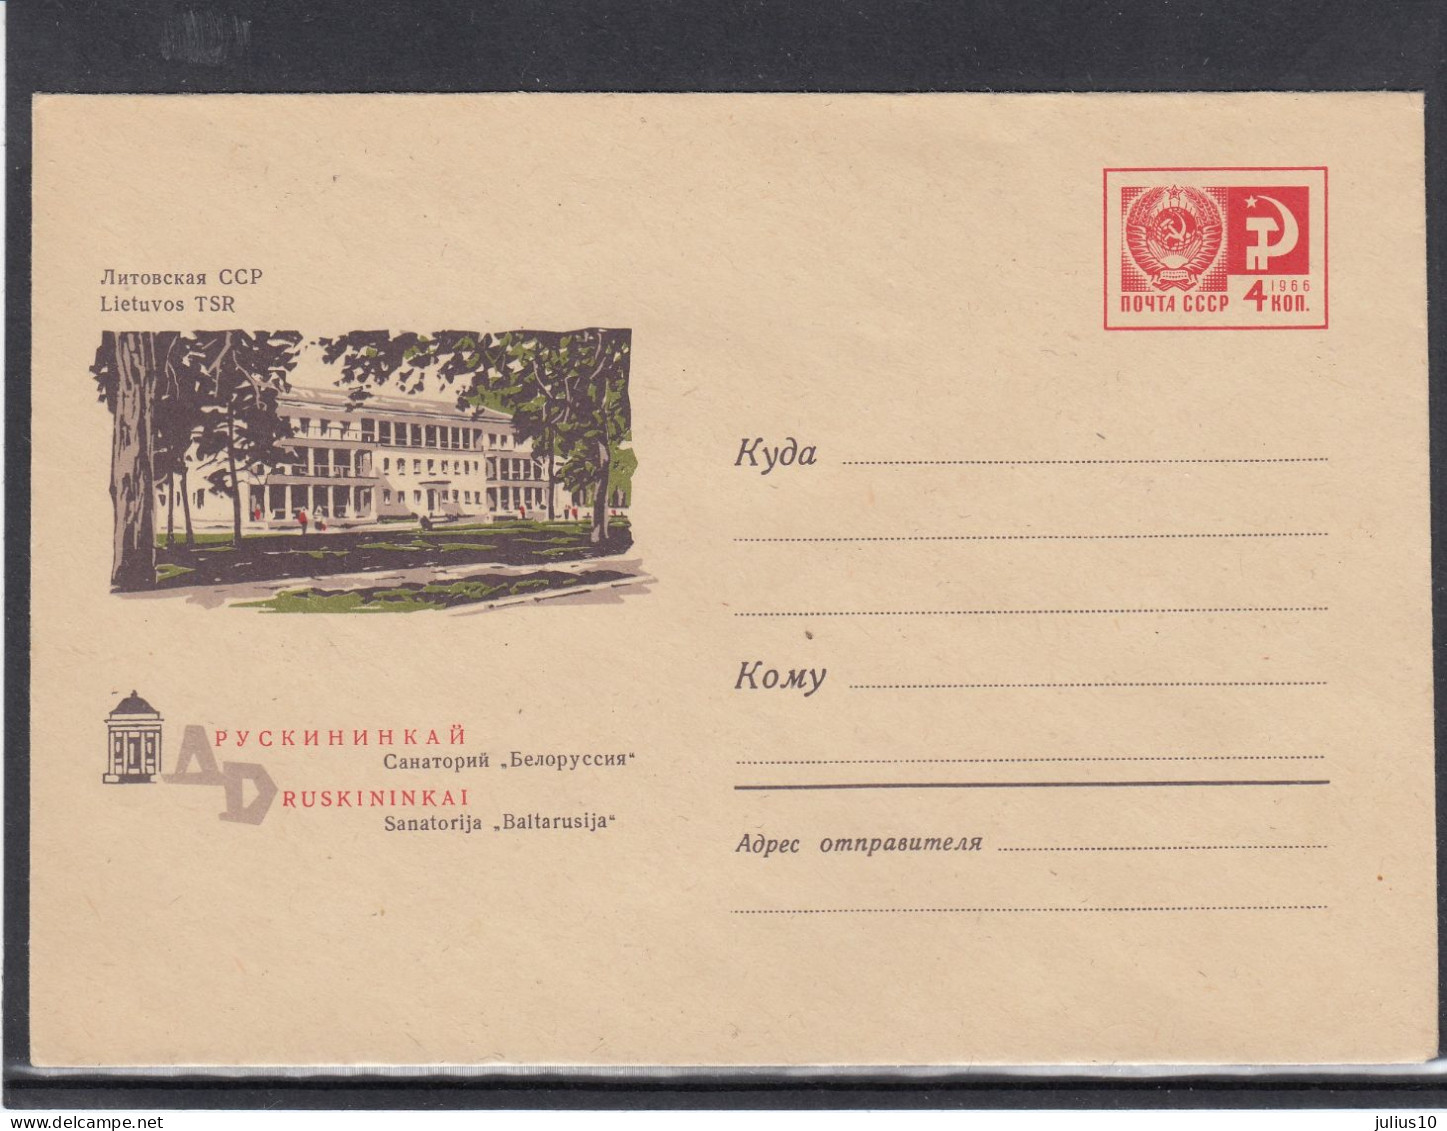 LITHUANIA (USSR) 1967 Cover Druskininkai Sanatorium “Belarus” #LTV16 - Lithuania